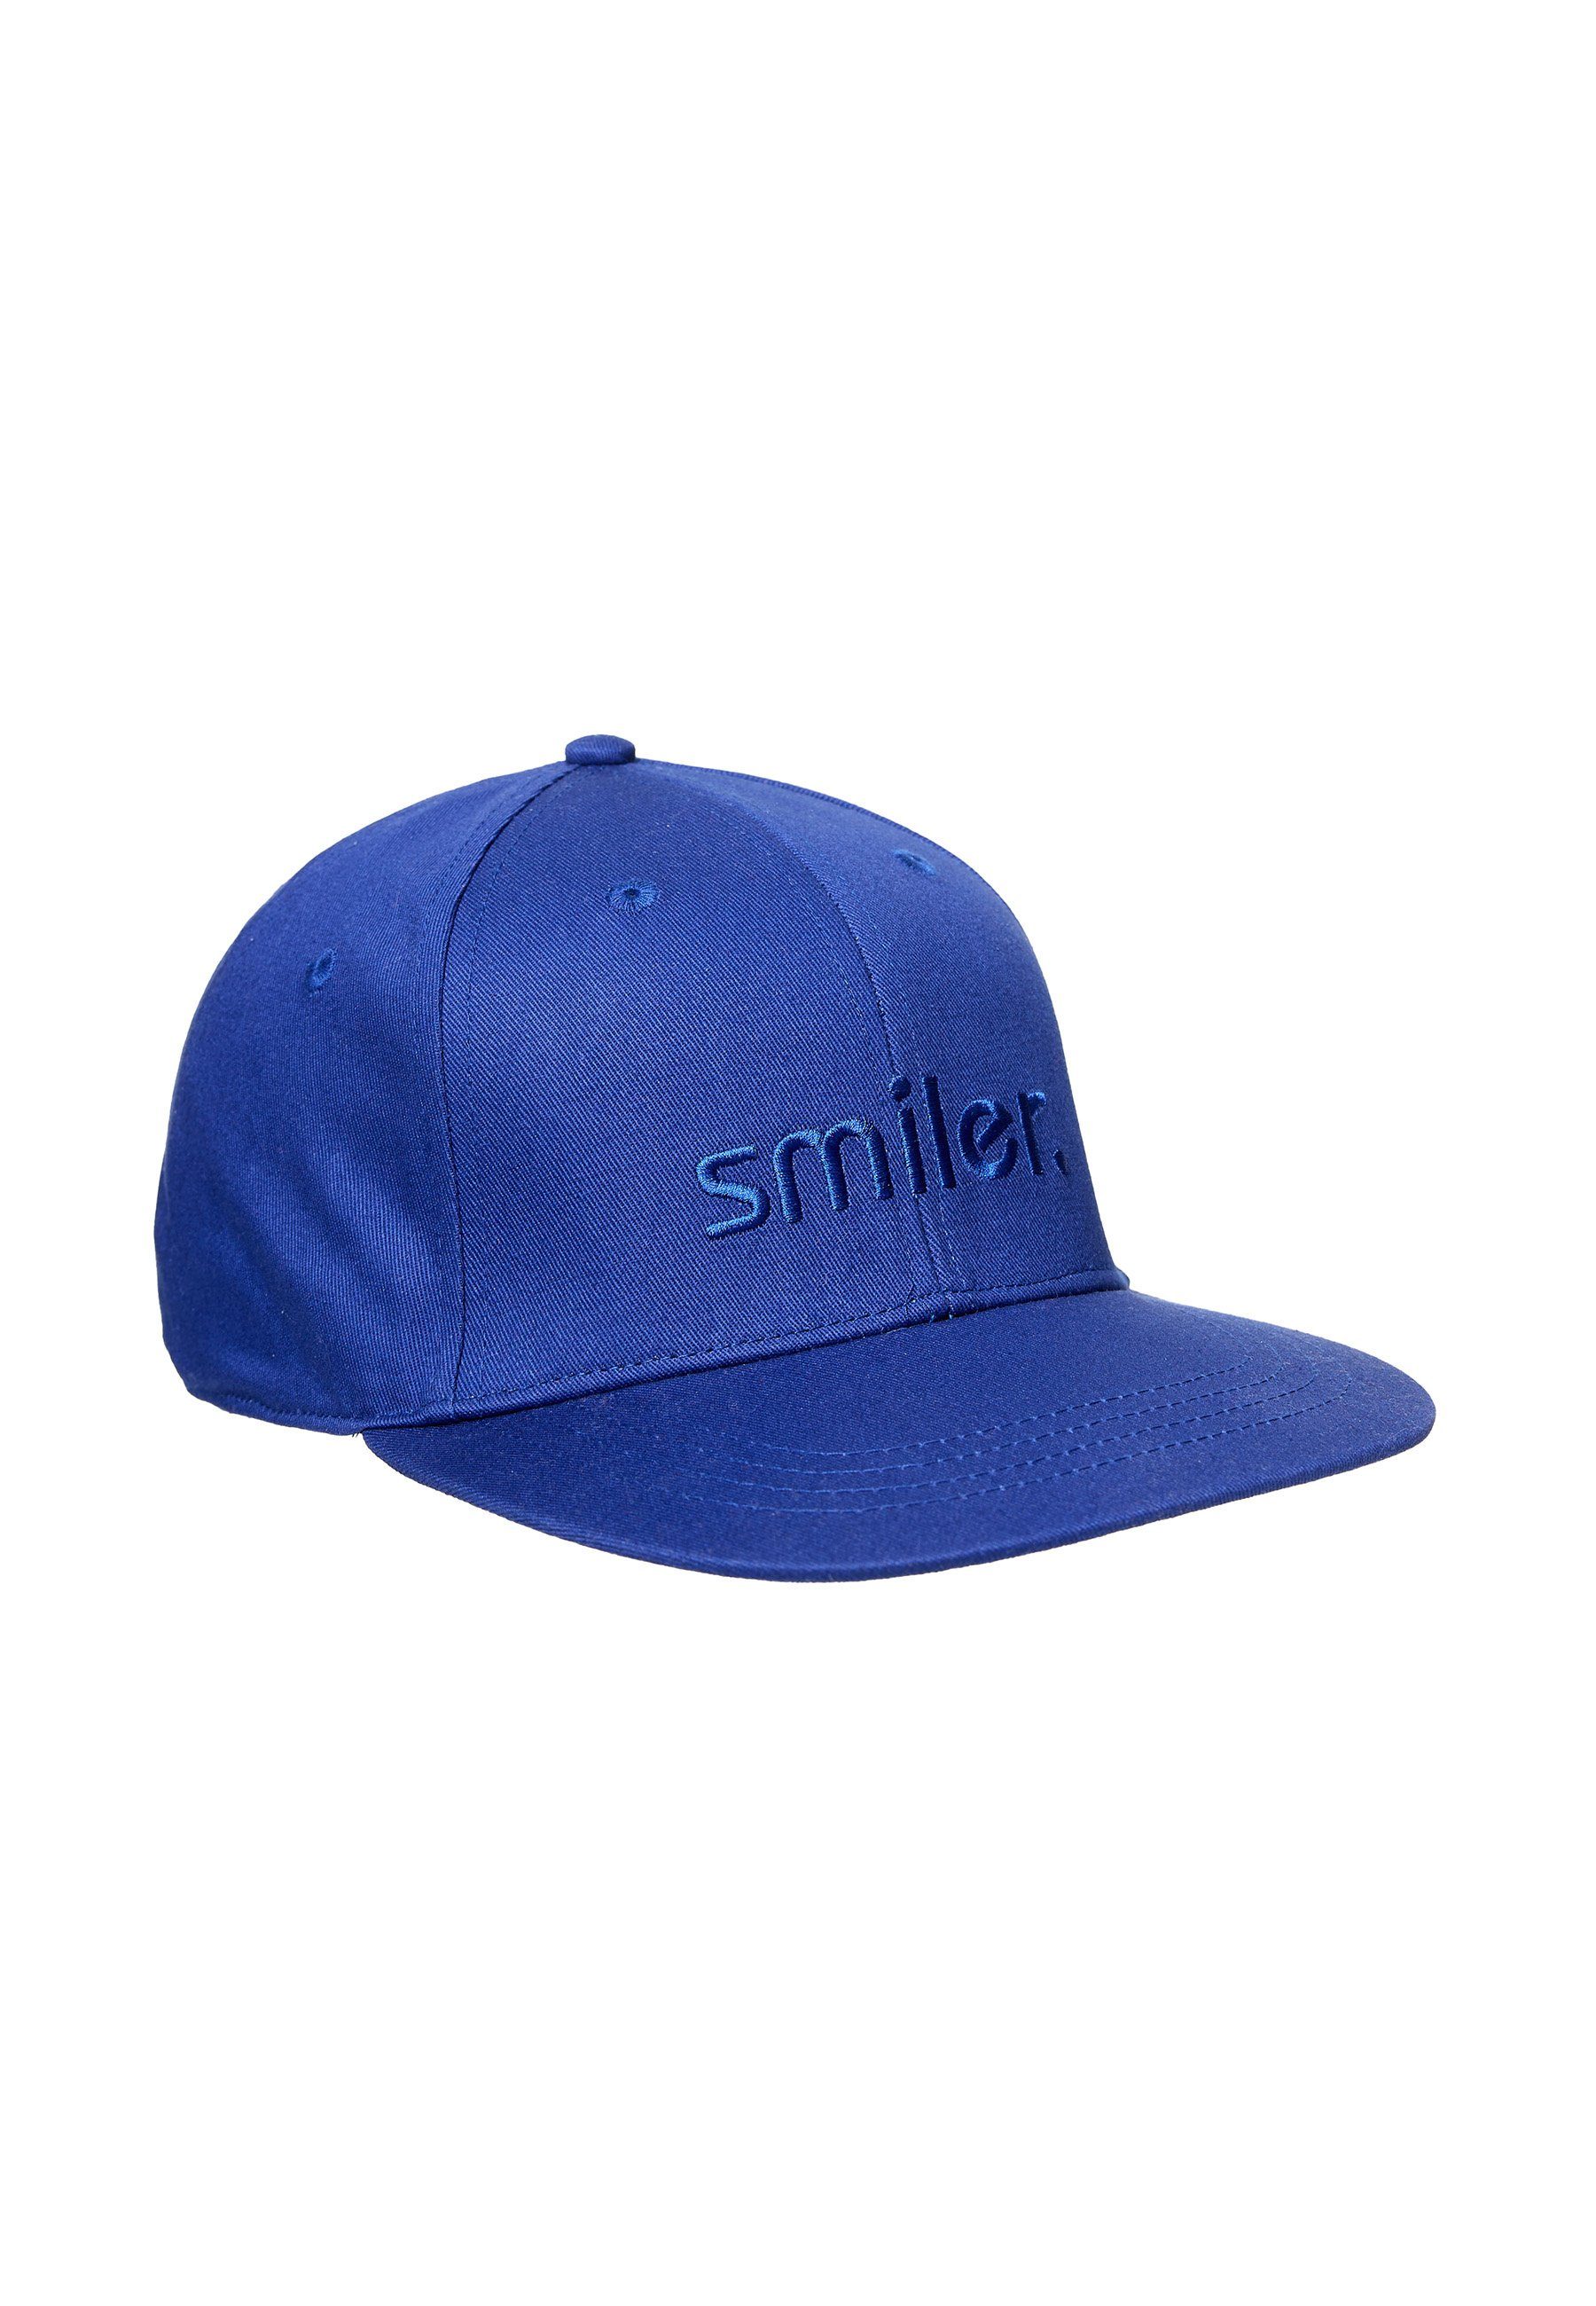 smiler. Snapback Cap shine. blau | Snapback Caps